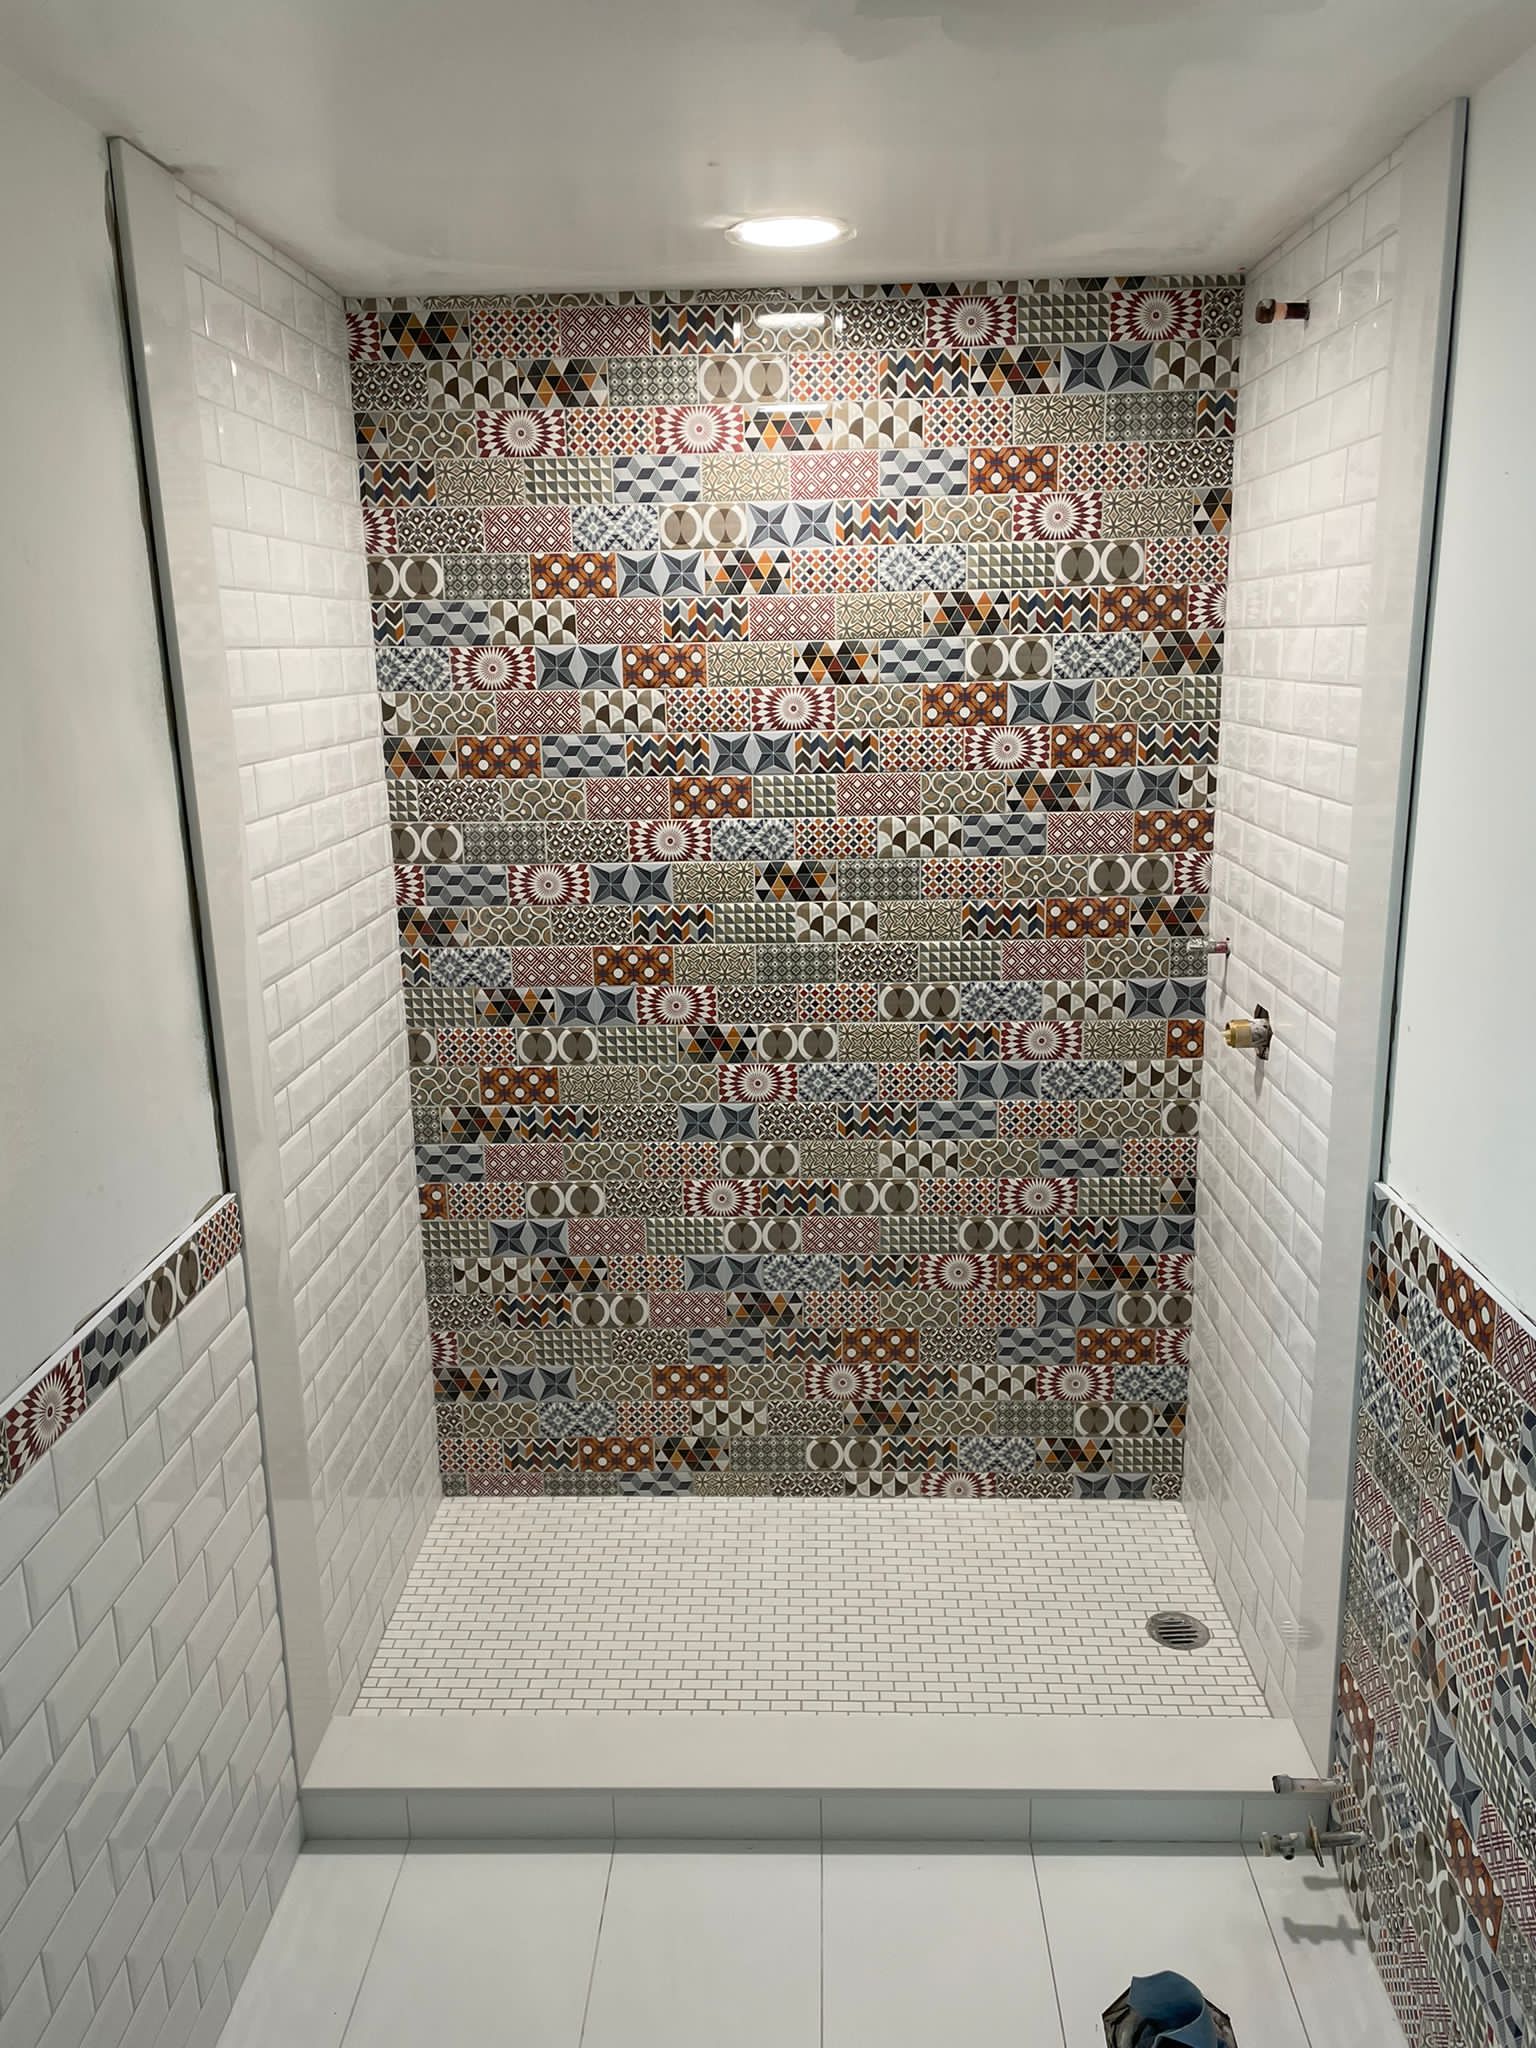 Kitchener tiles installation at Markom Tiles